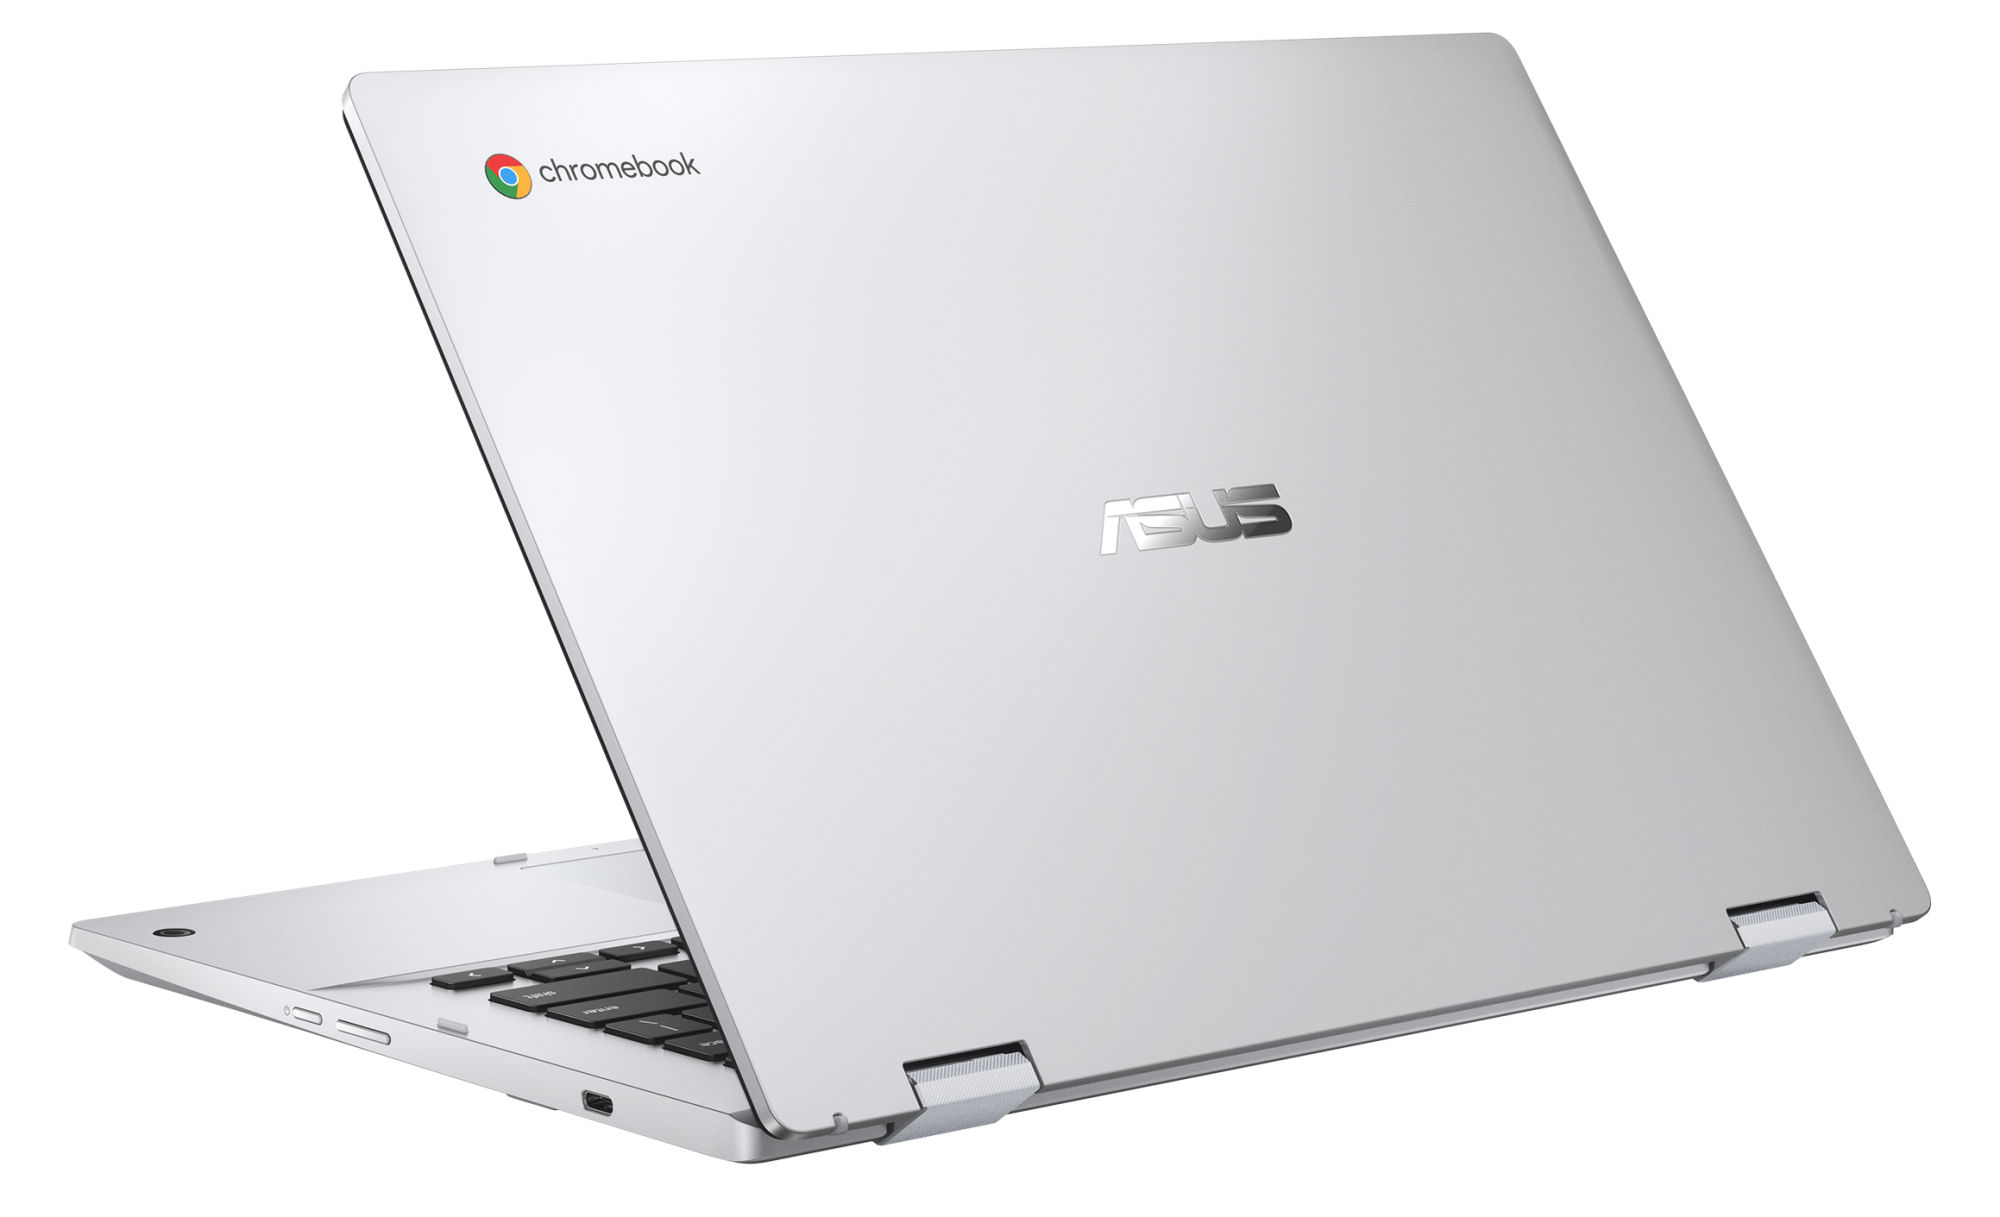 Asus Chromebook Flip CM1 in review: Silent 2-in-1 laptop